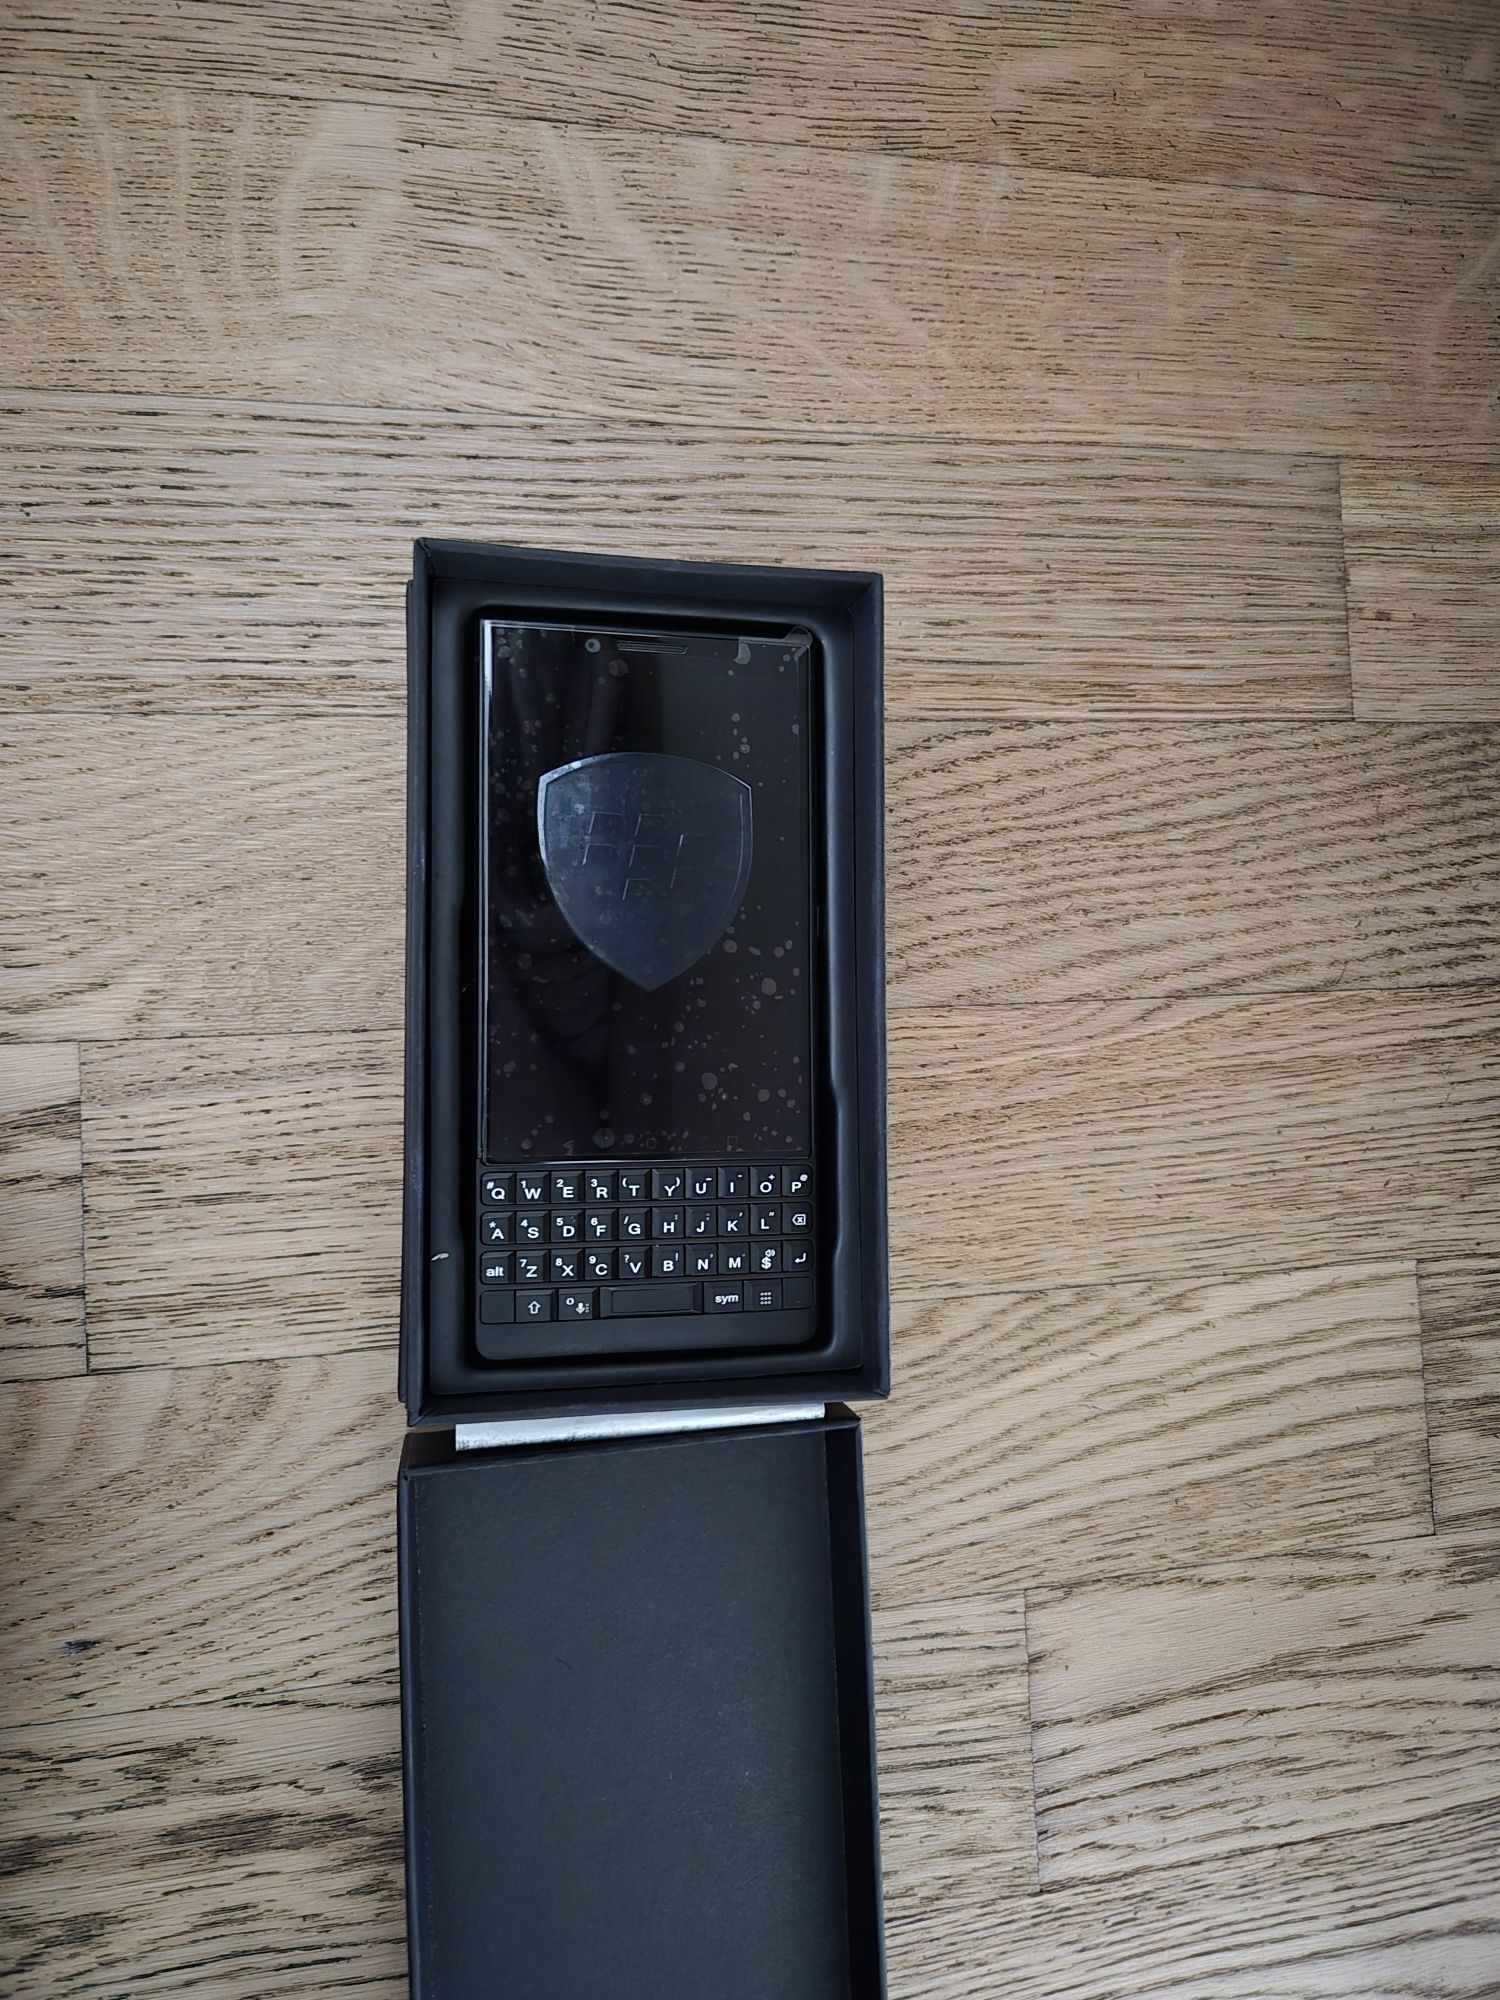 Blackberry Key² nou, black edition